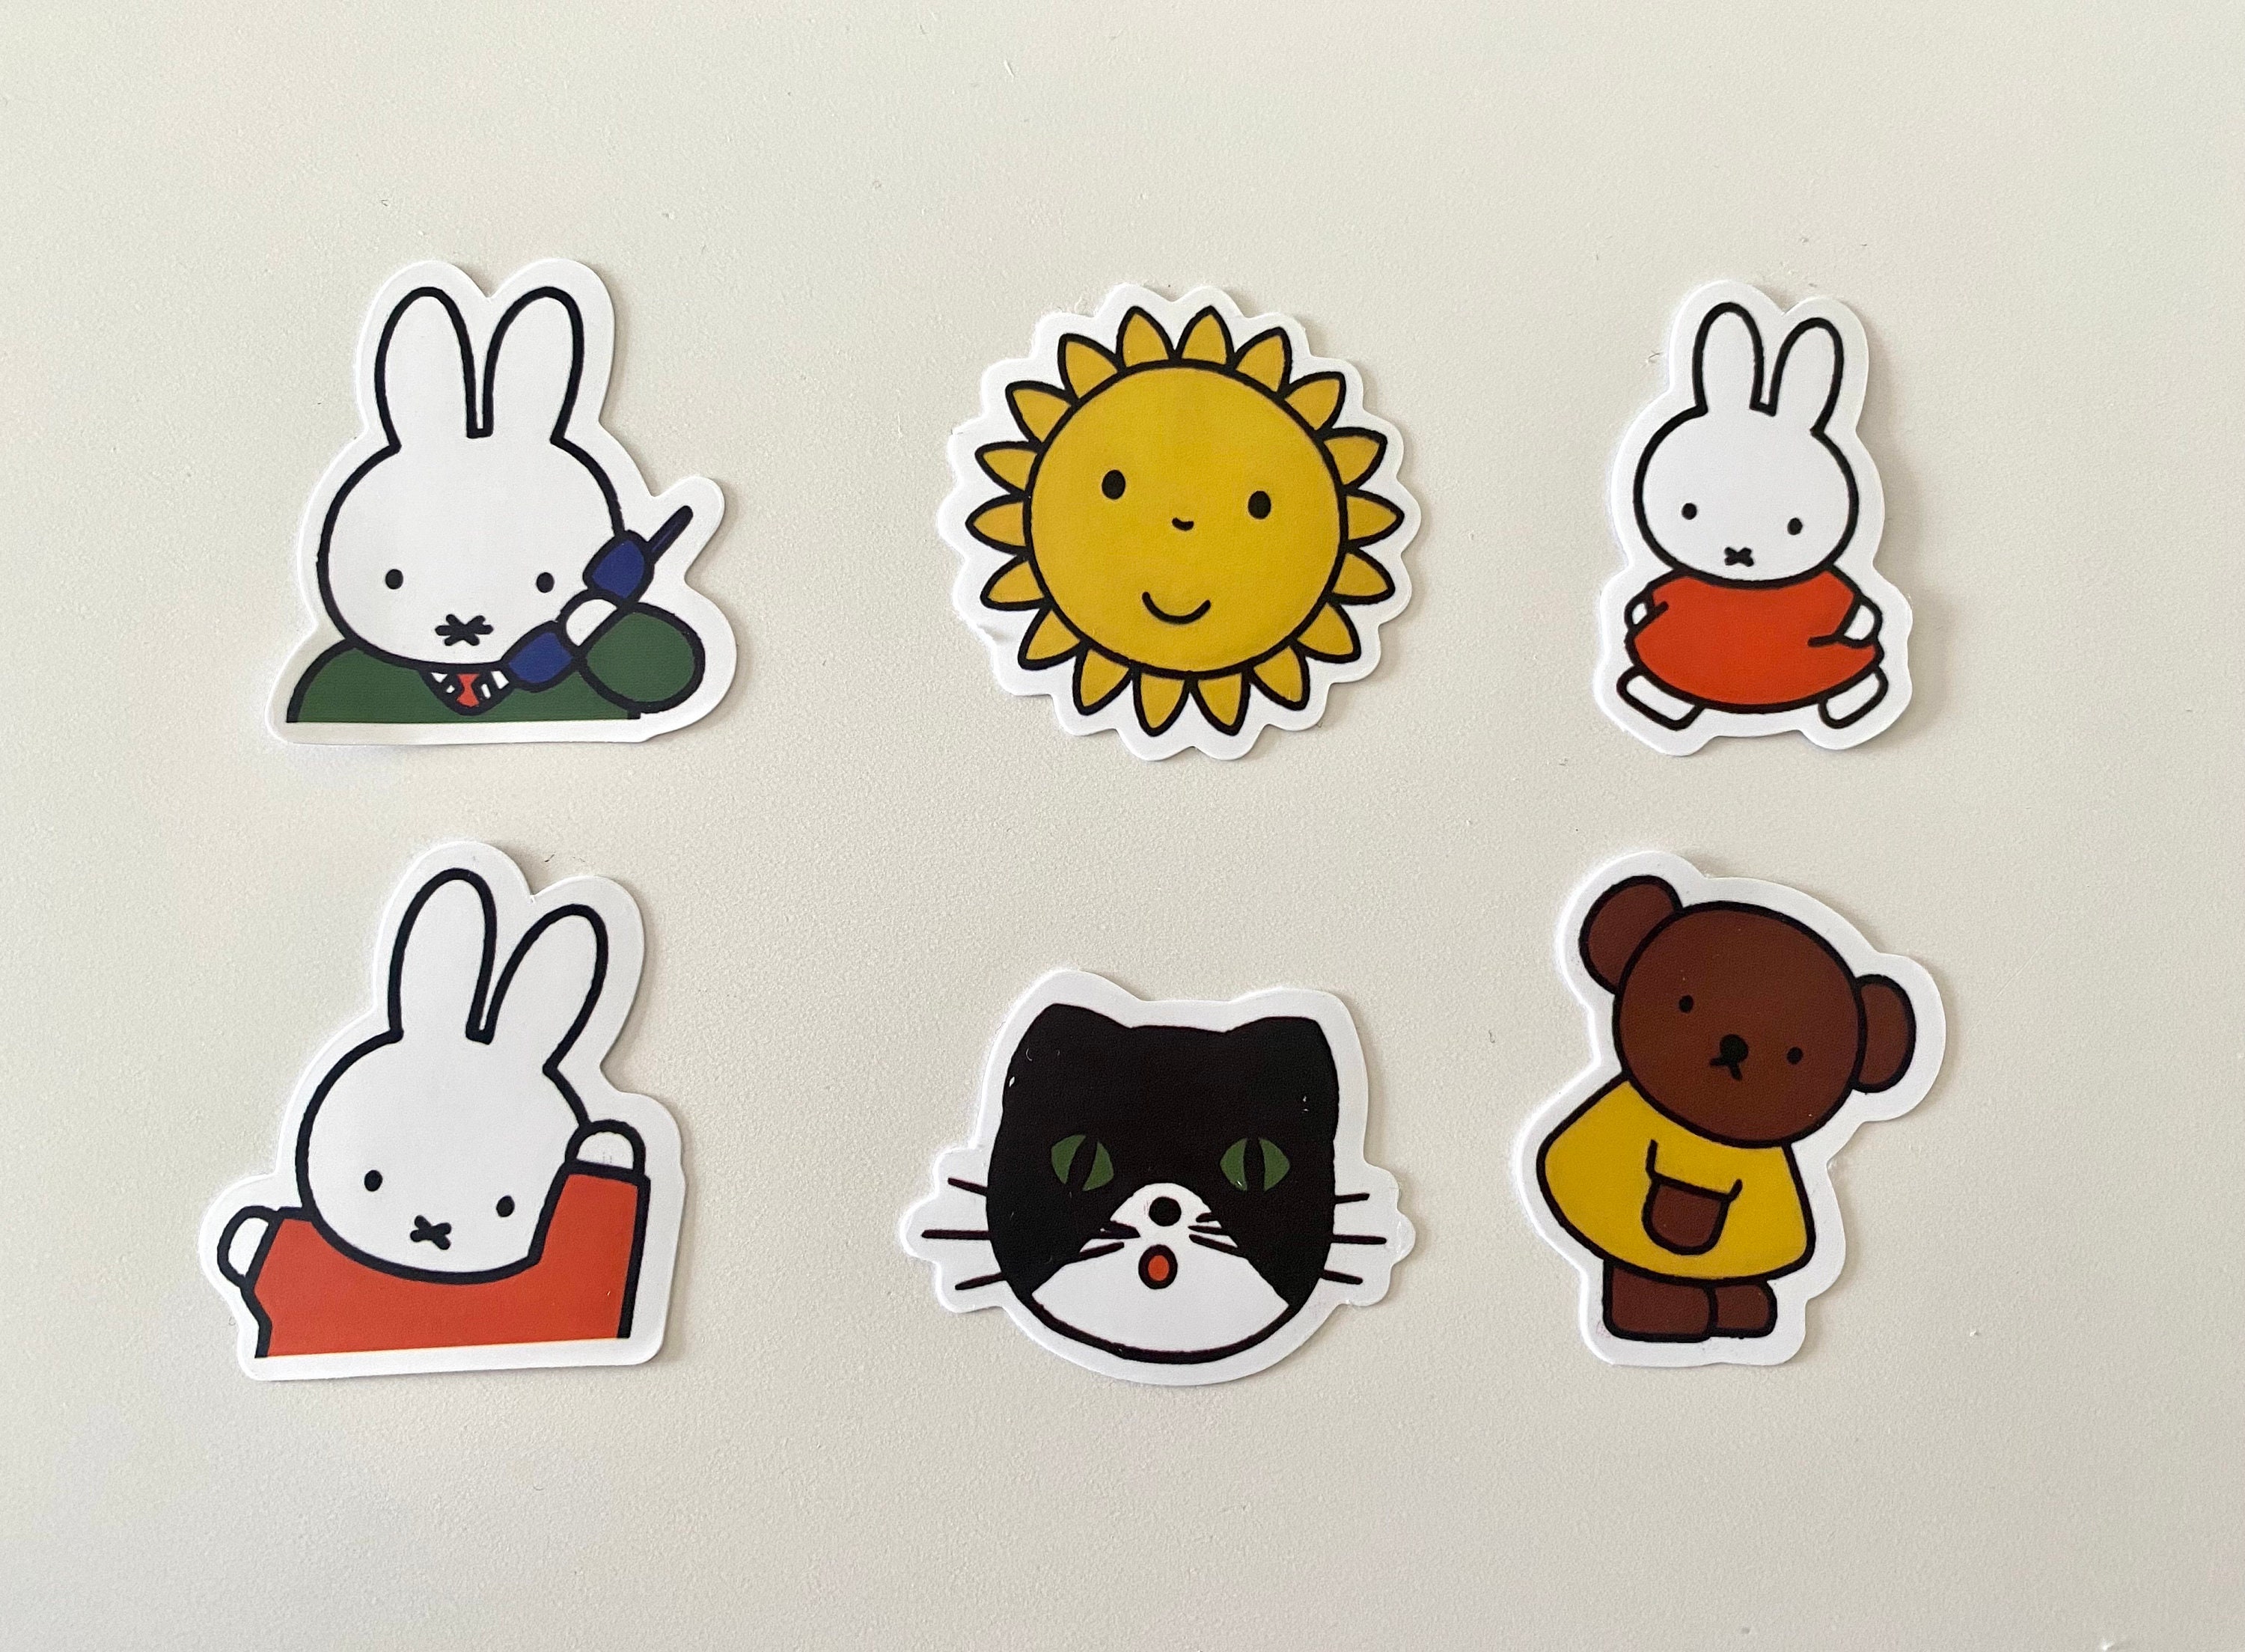 Miffy Stickers Pack 6pcs/set 